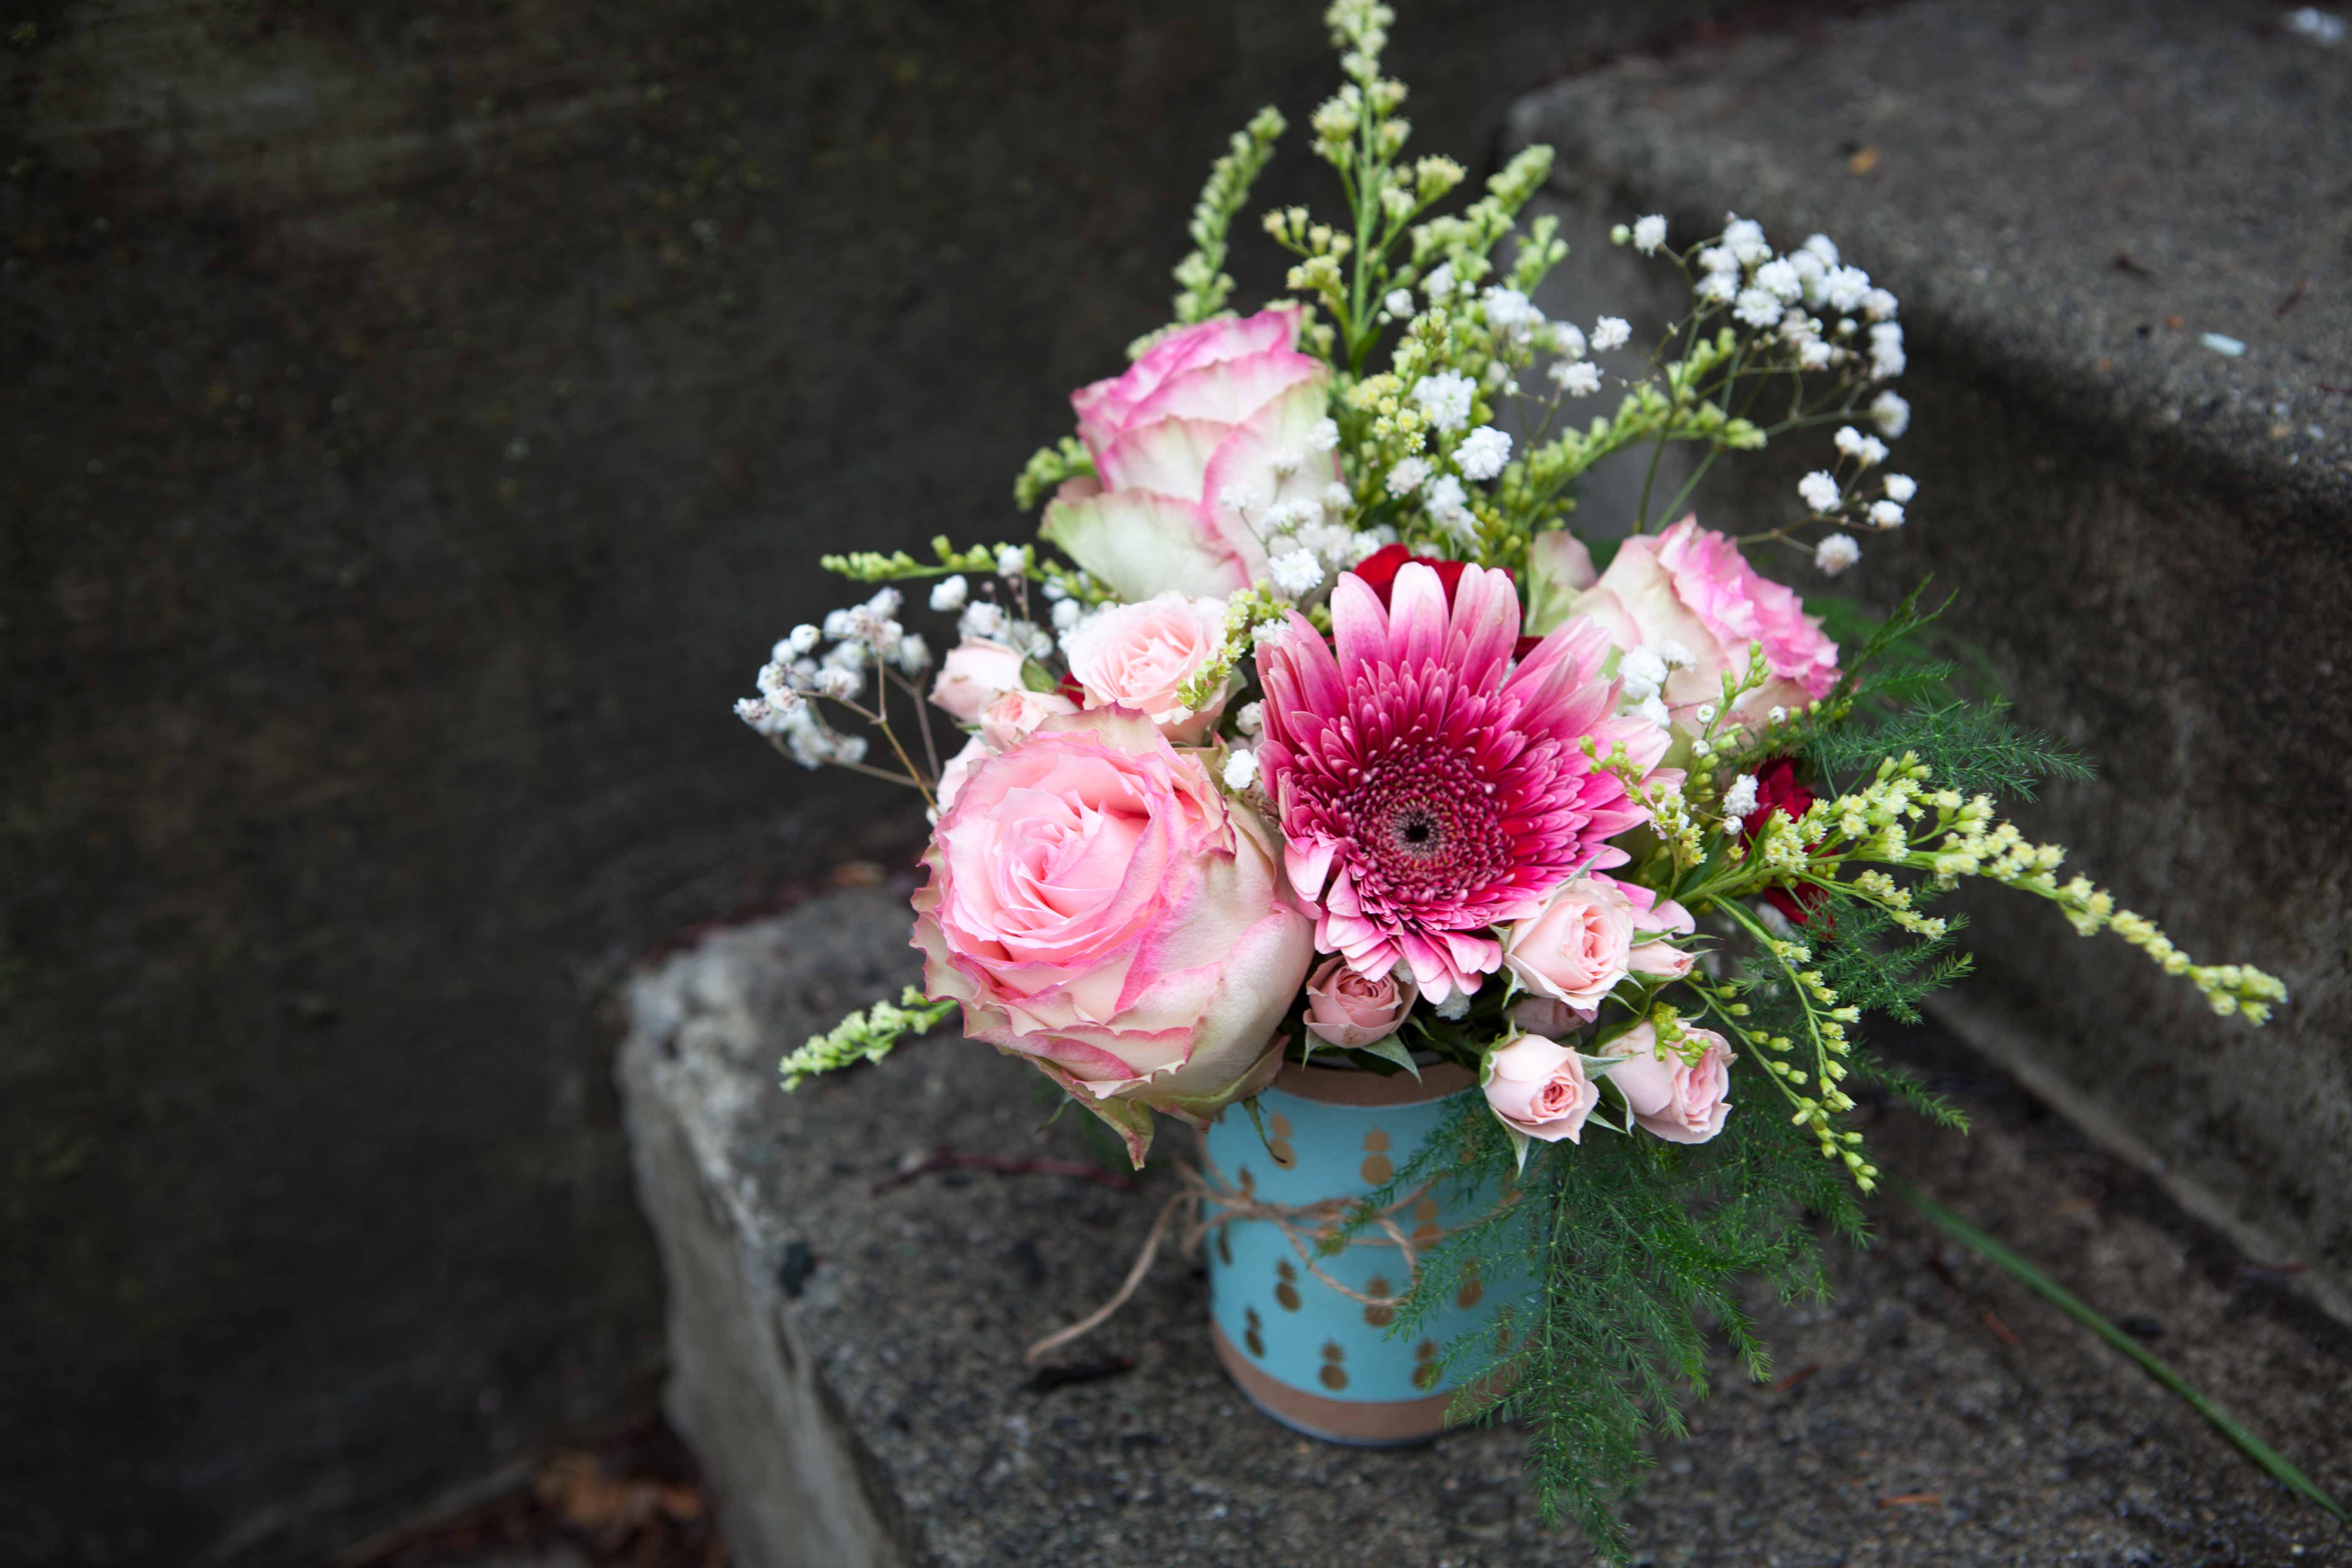 Small arrangement with roses, spray roses, gerbera daisy, salidago, baby's breath and plumosa | designed by Natasha Price of Paper Peony Alaska